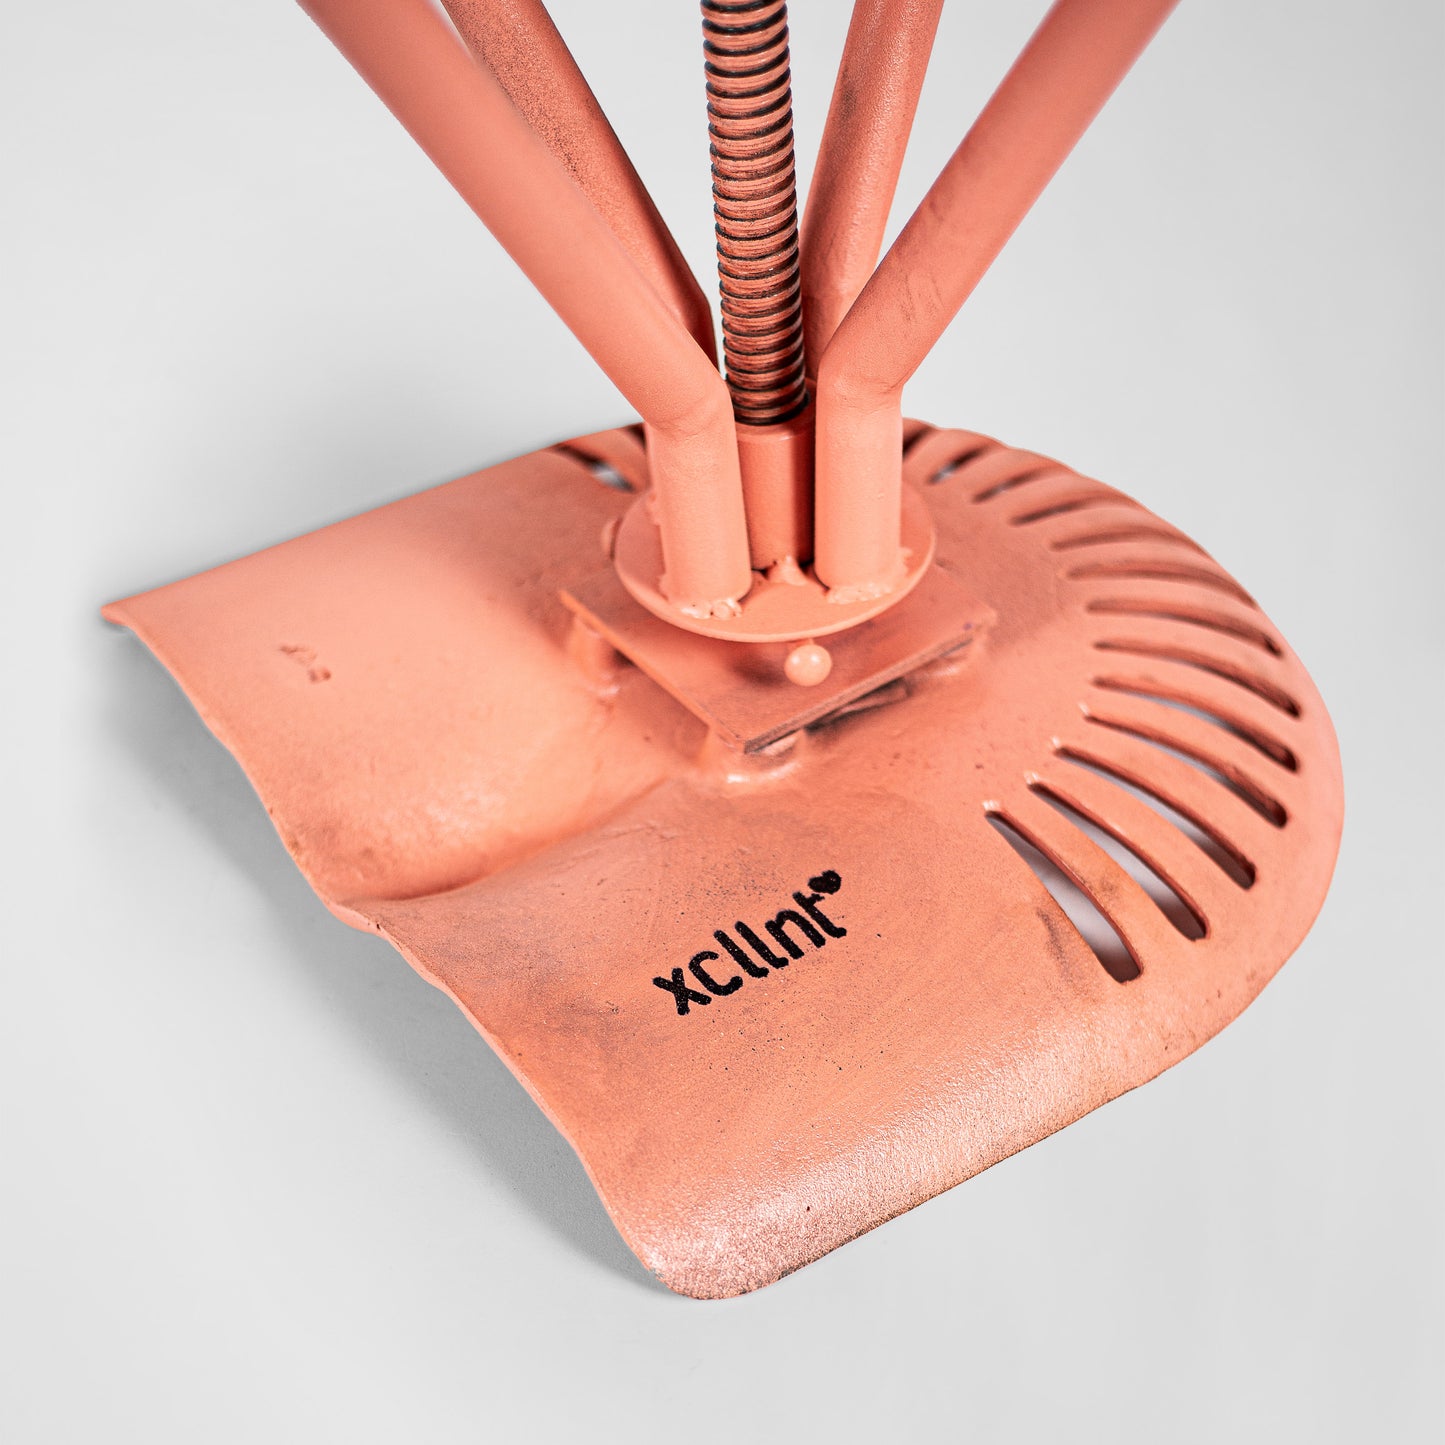 Greta Grease – Handmade industrial design swivel stool made of metal in flamingo red